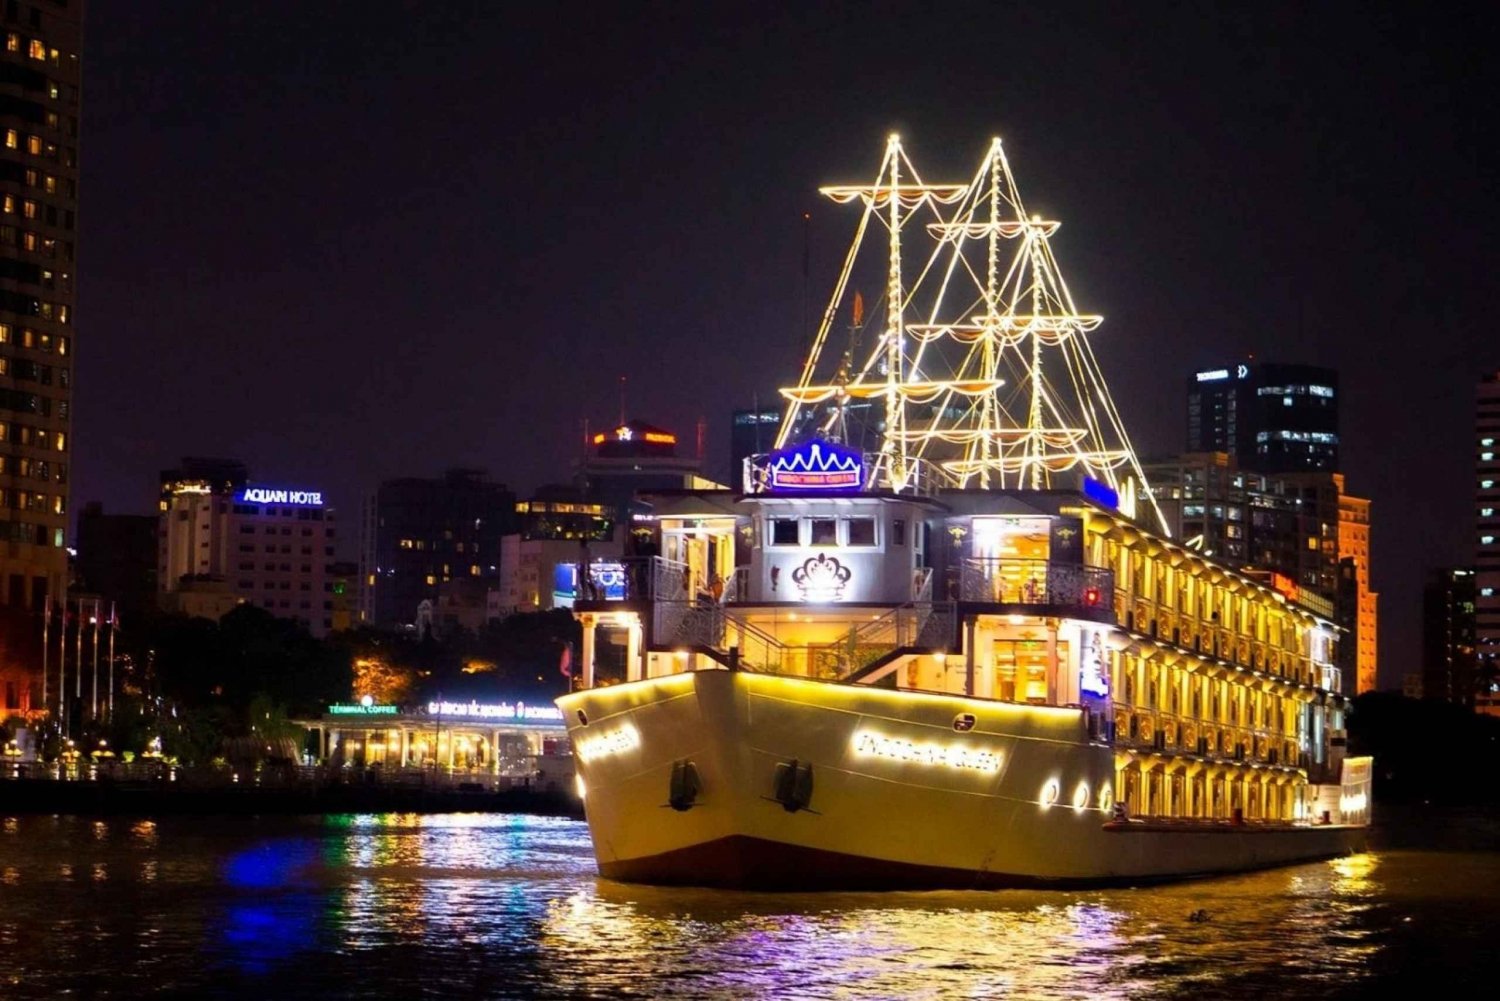 Ho Chi Minh: Saigon River Dinner Cruise with 6-Course Menu